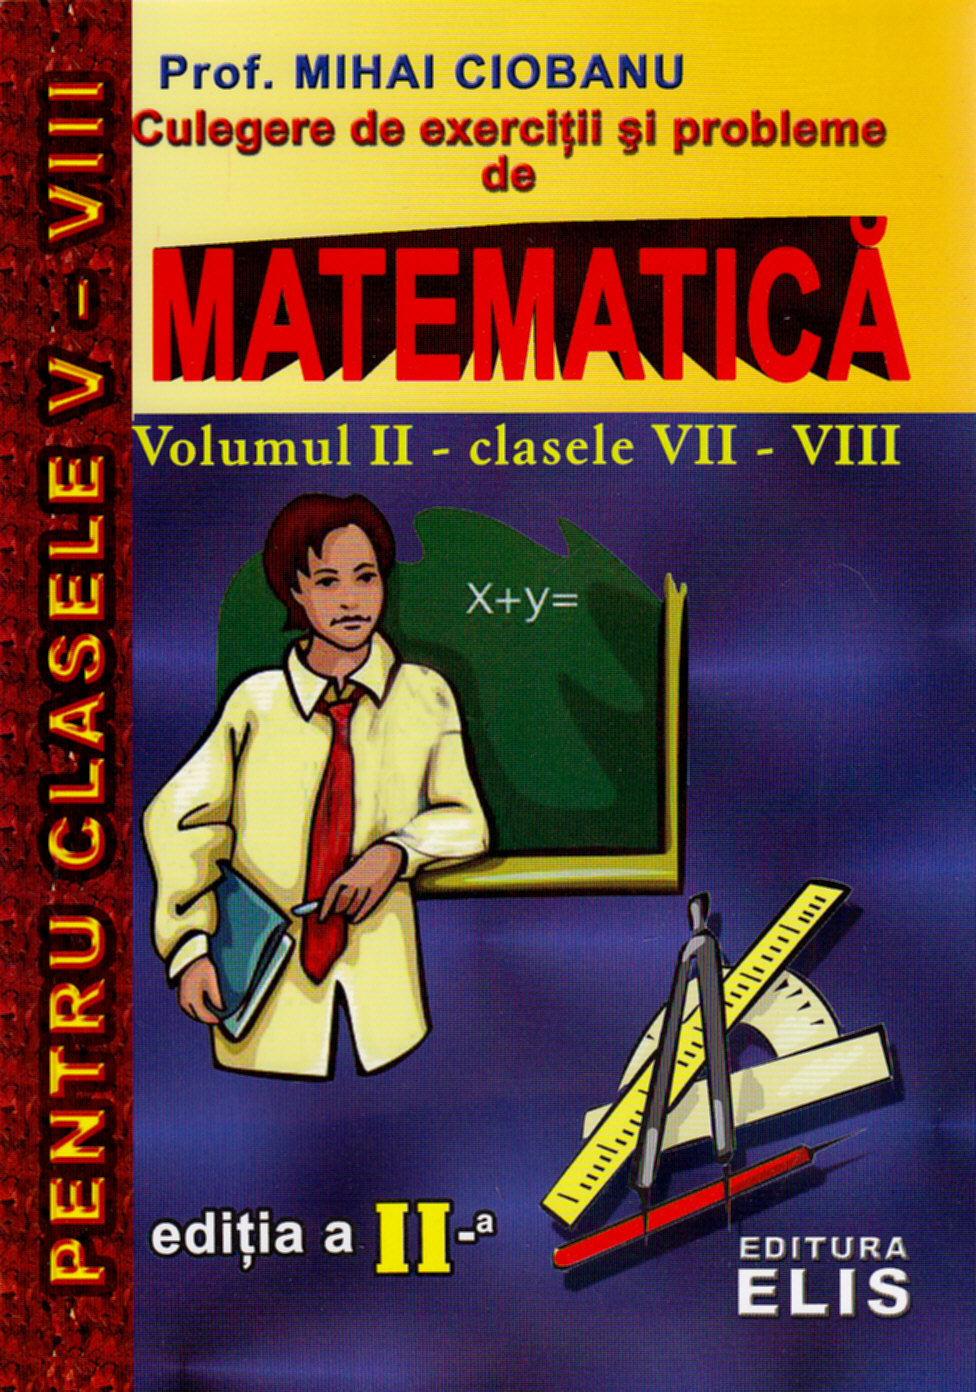 Matematica volumul II - Clasele VII-VIII Culegere de exercitii si probleme - Mihai Ciobanu